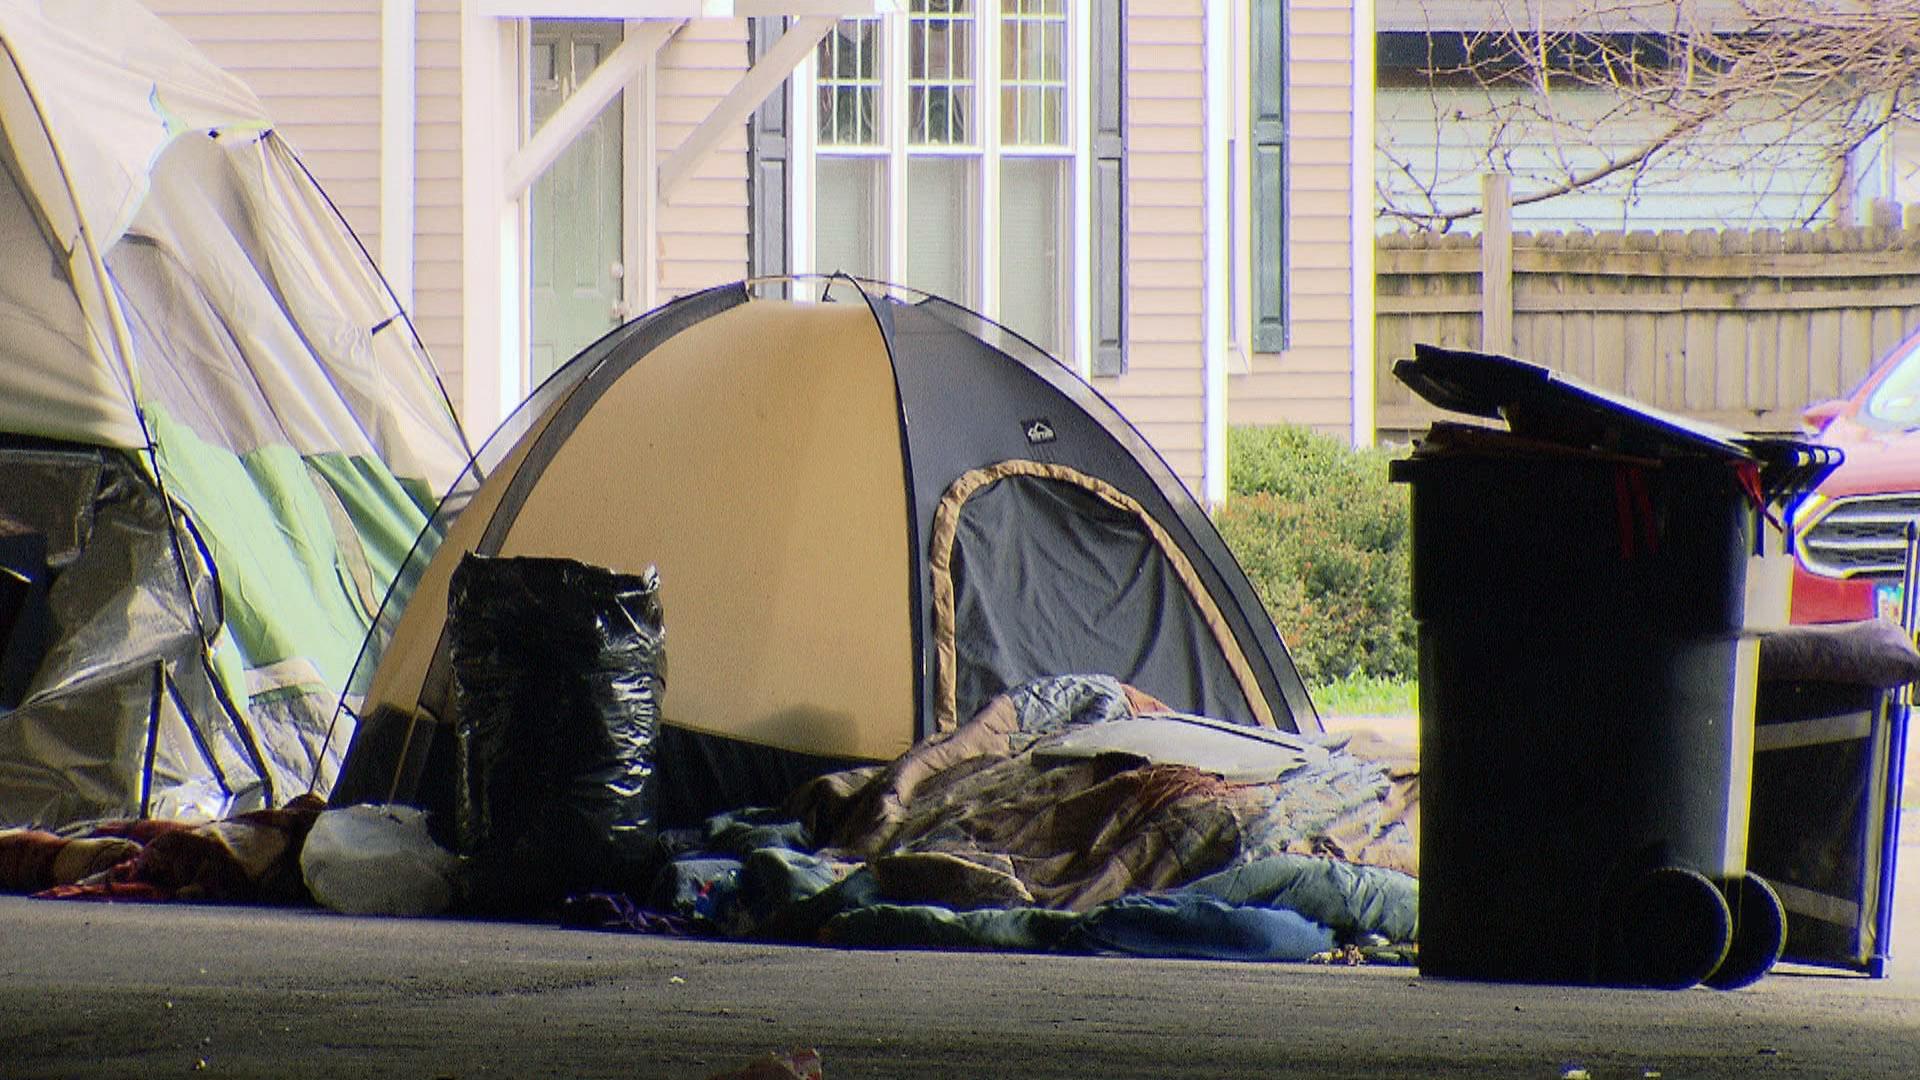 A homeless encampment in Chicago. (WTTW News)